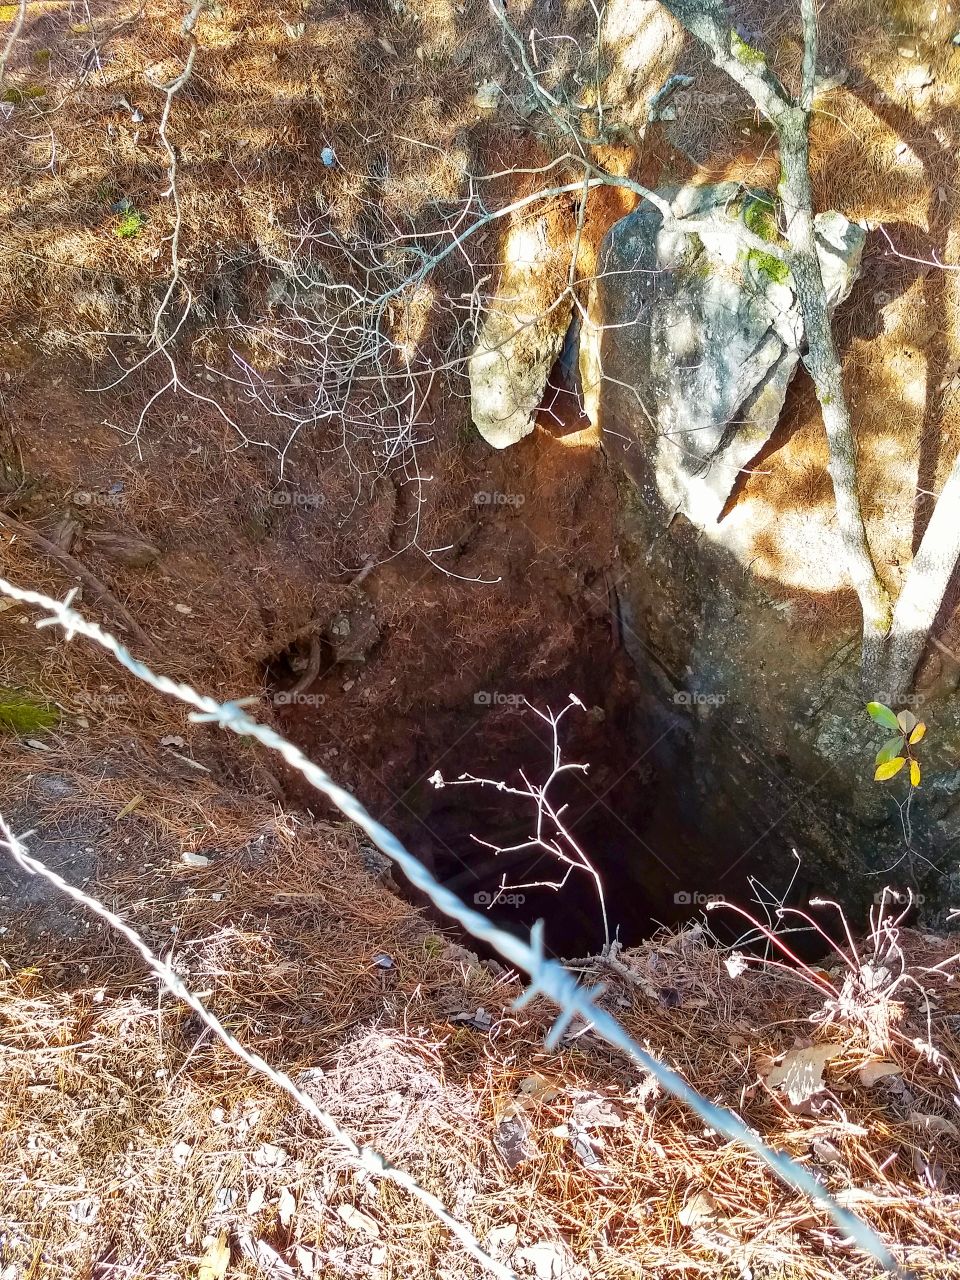 Mine shaft, open pit, along a hiking trail at Murder Rock, Branson Missouri.